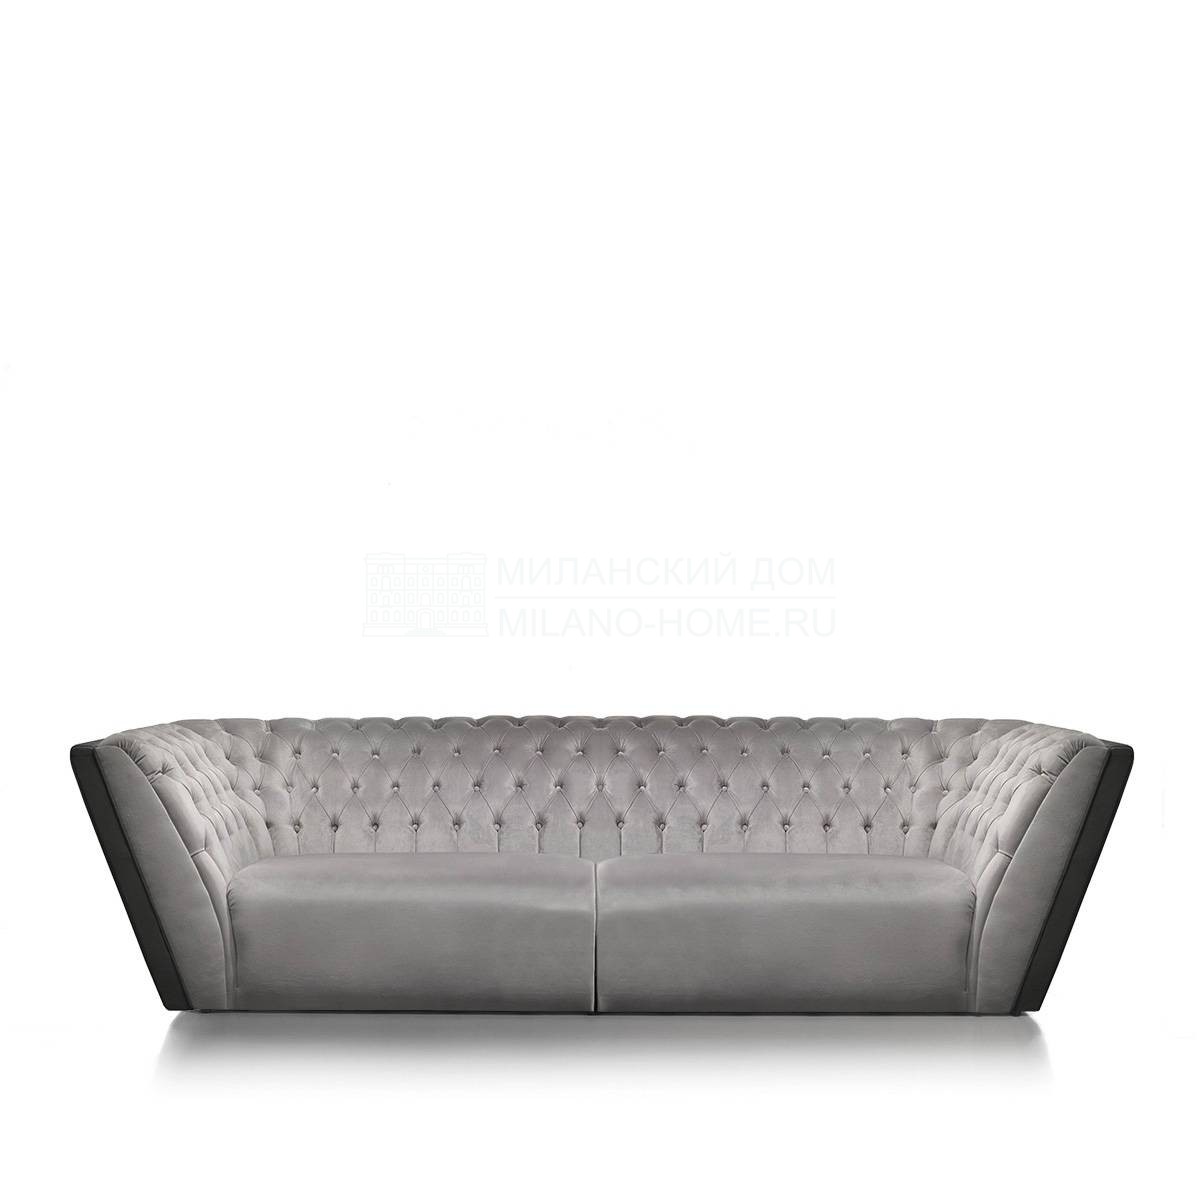 Прямой диван Bowie sofa из Испании фабрики COLECCION ALEXANDRA